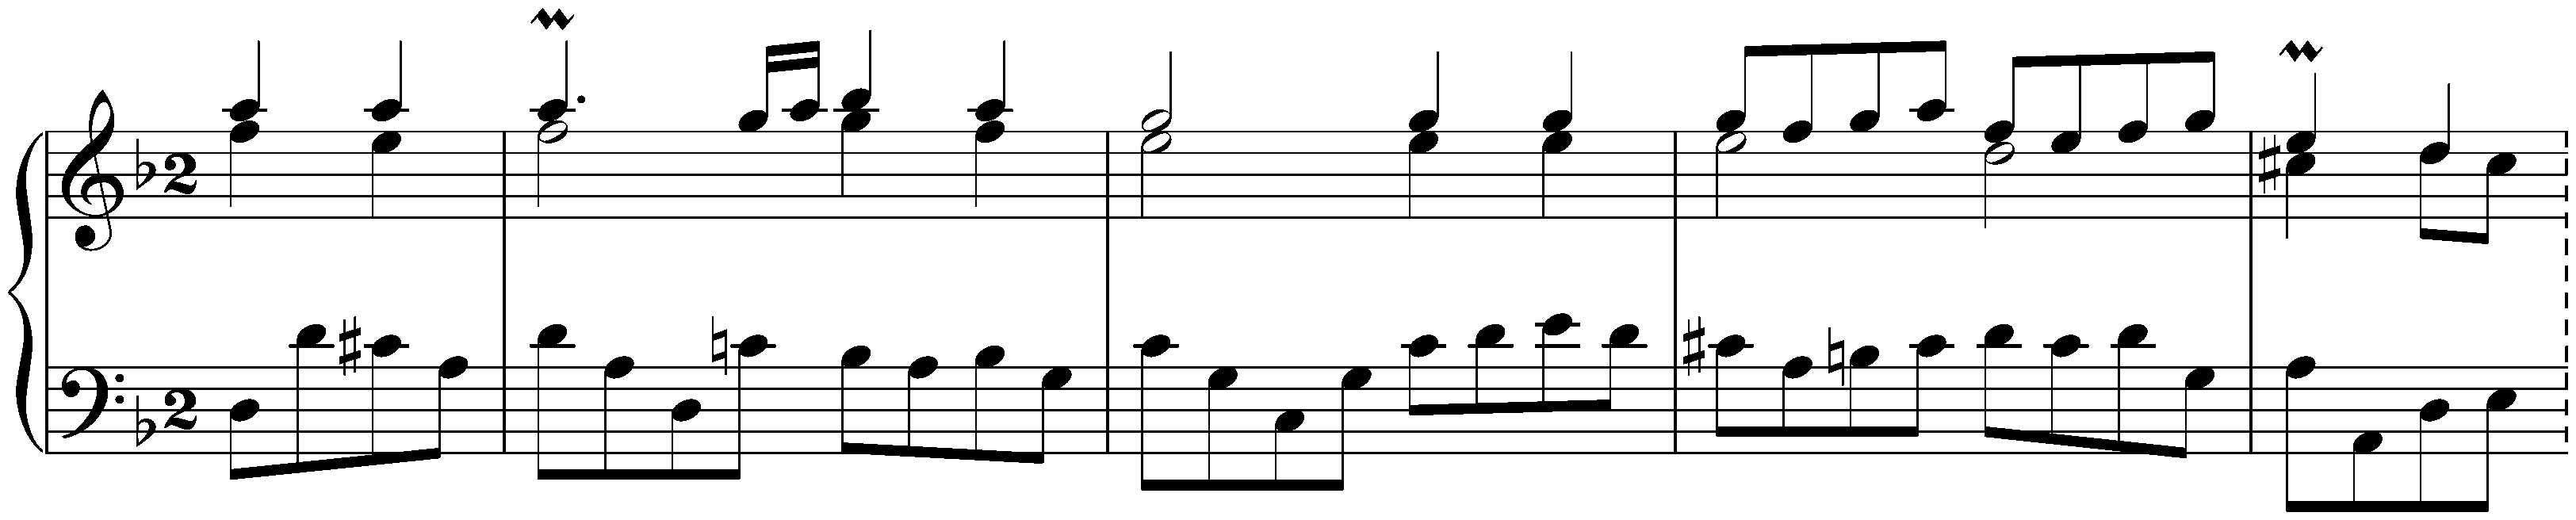 English Suite no. 6 in D minor, BWV 811; 5. Gavotte I – Gavotte II – Gavotte I